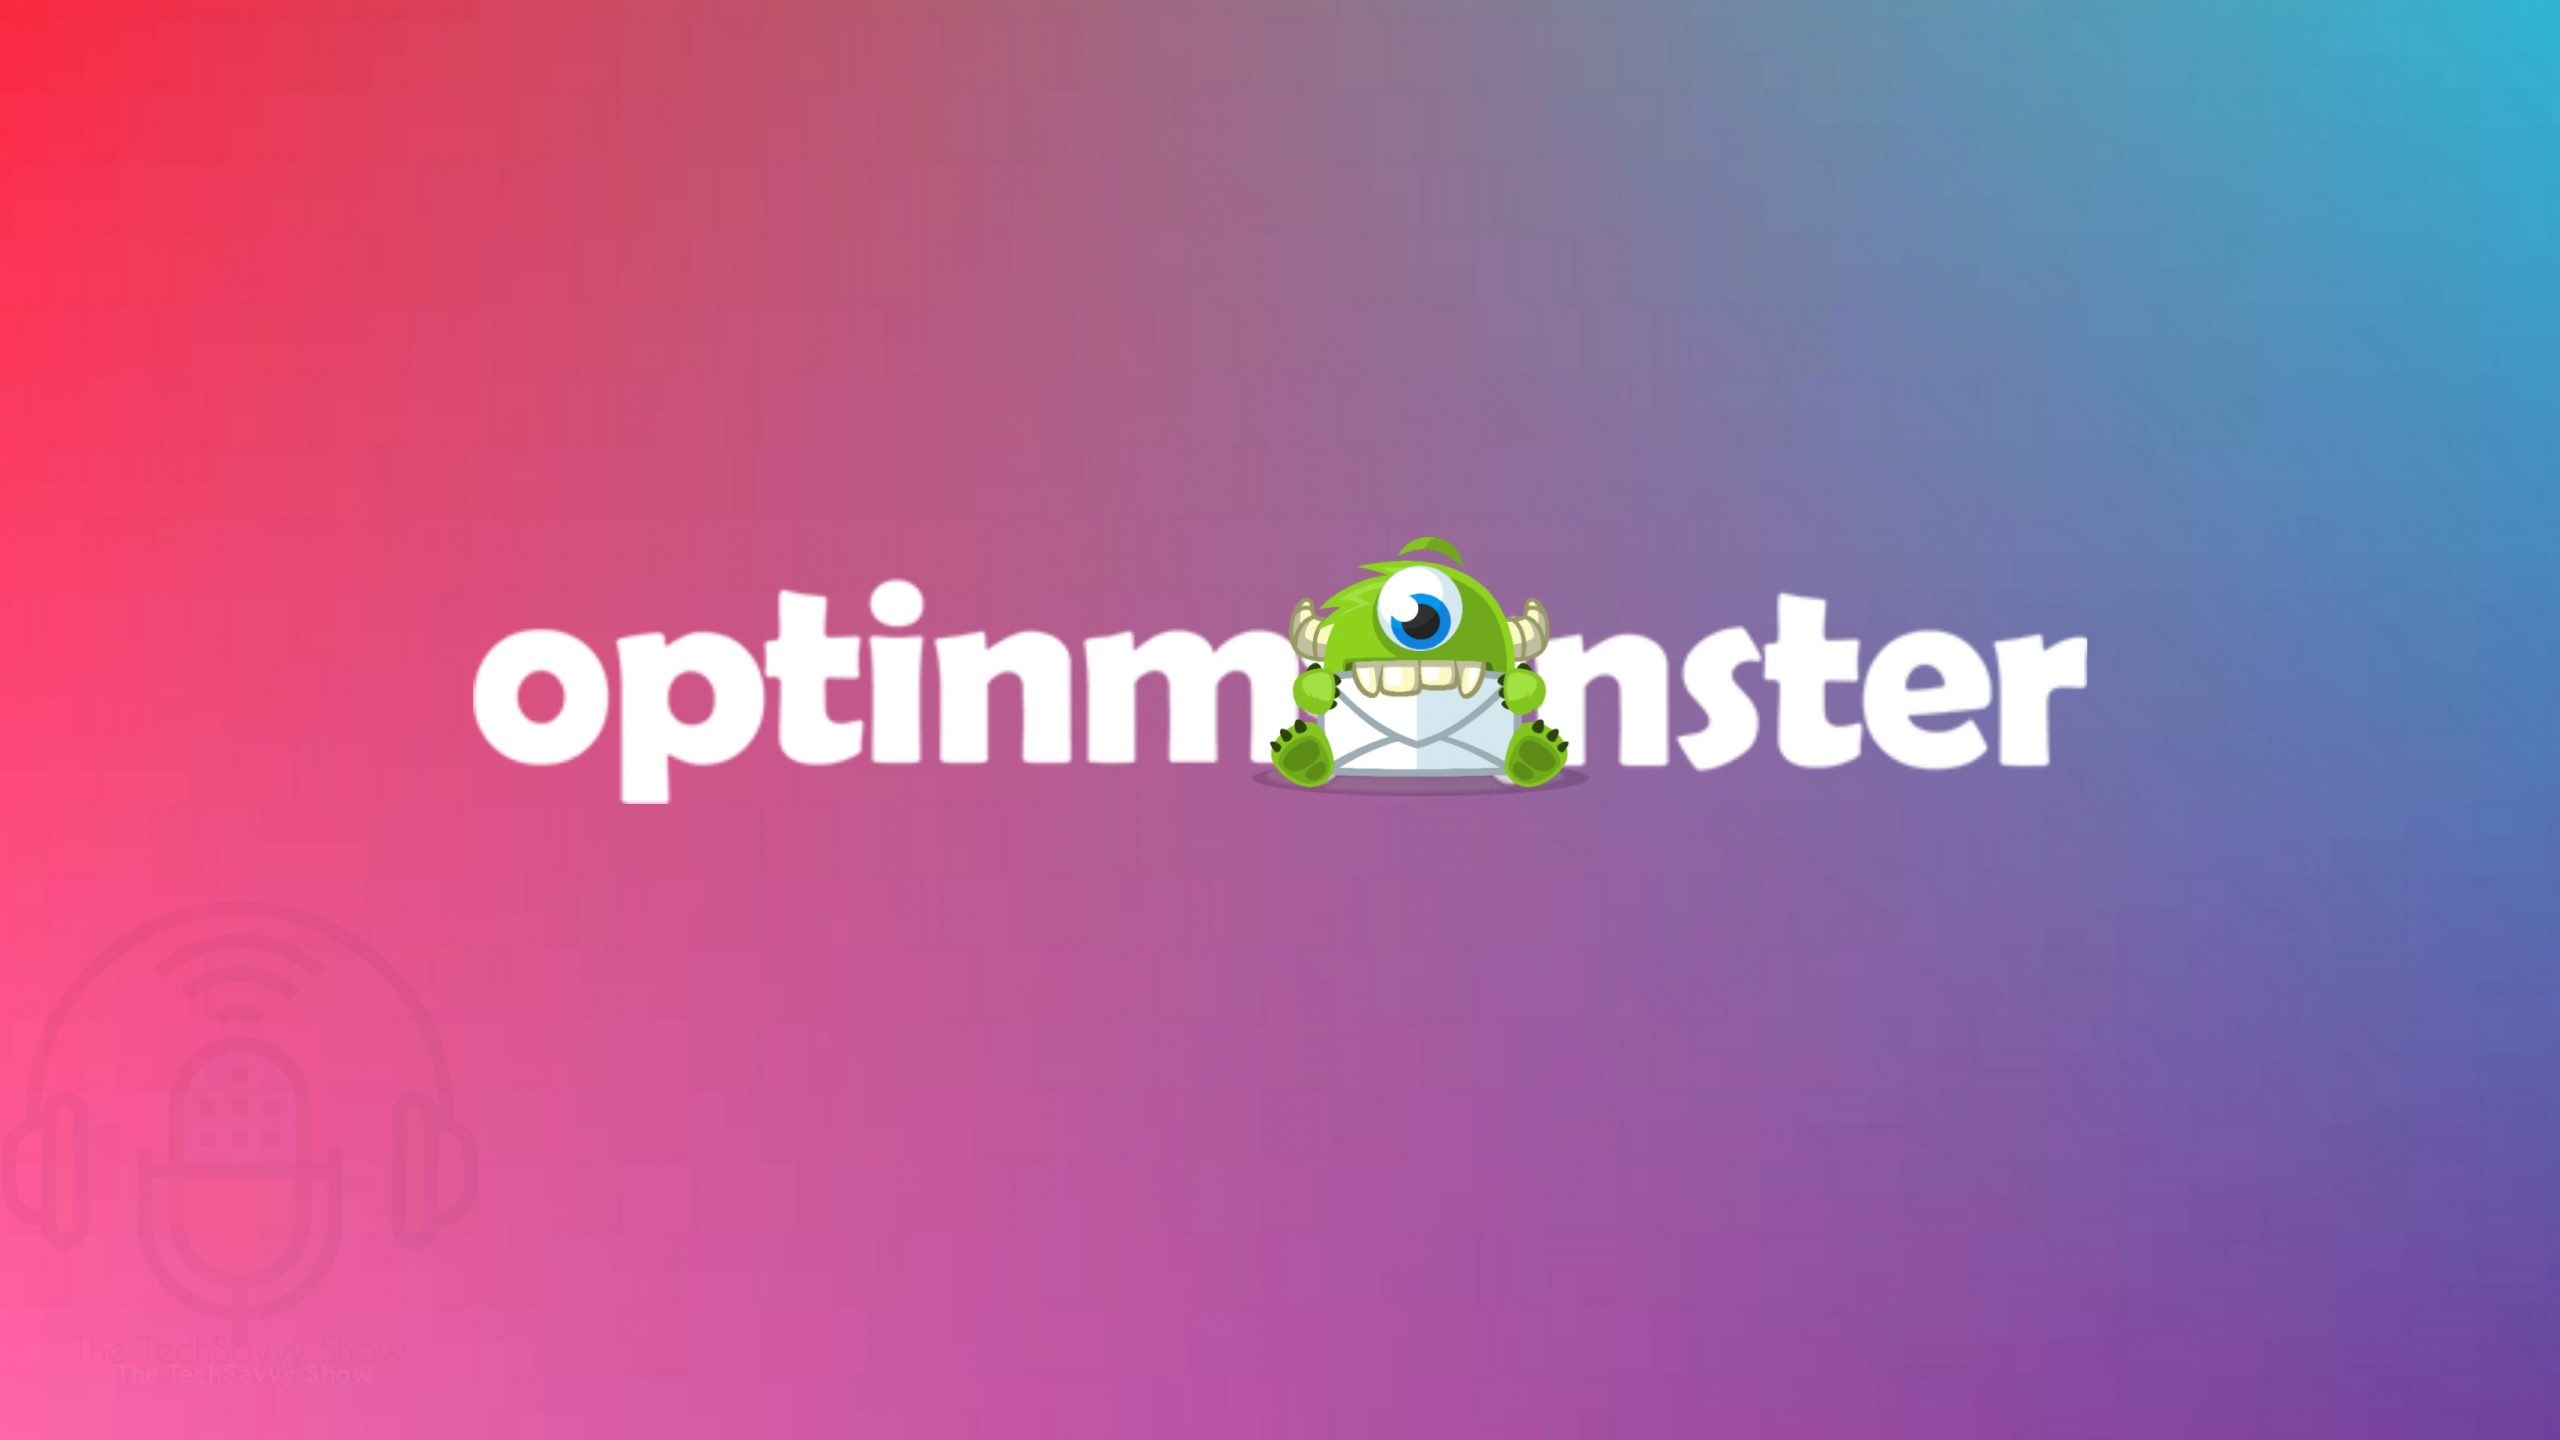 OptinMonster tool review